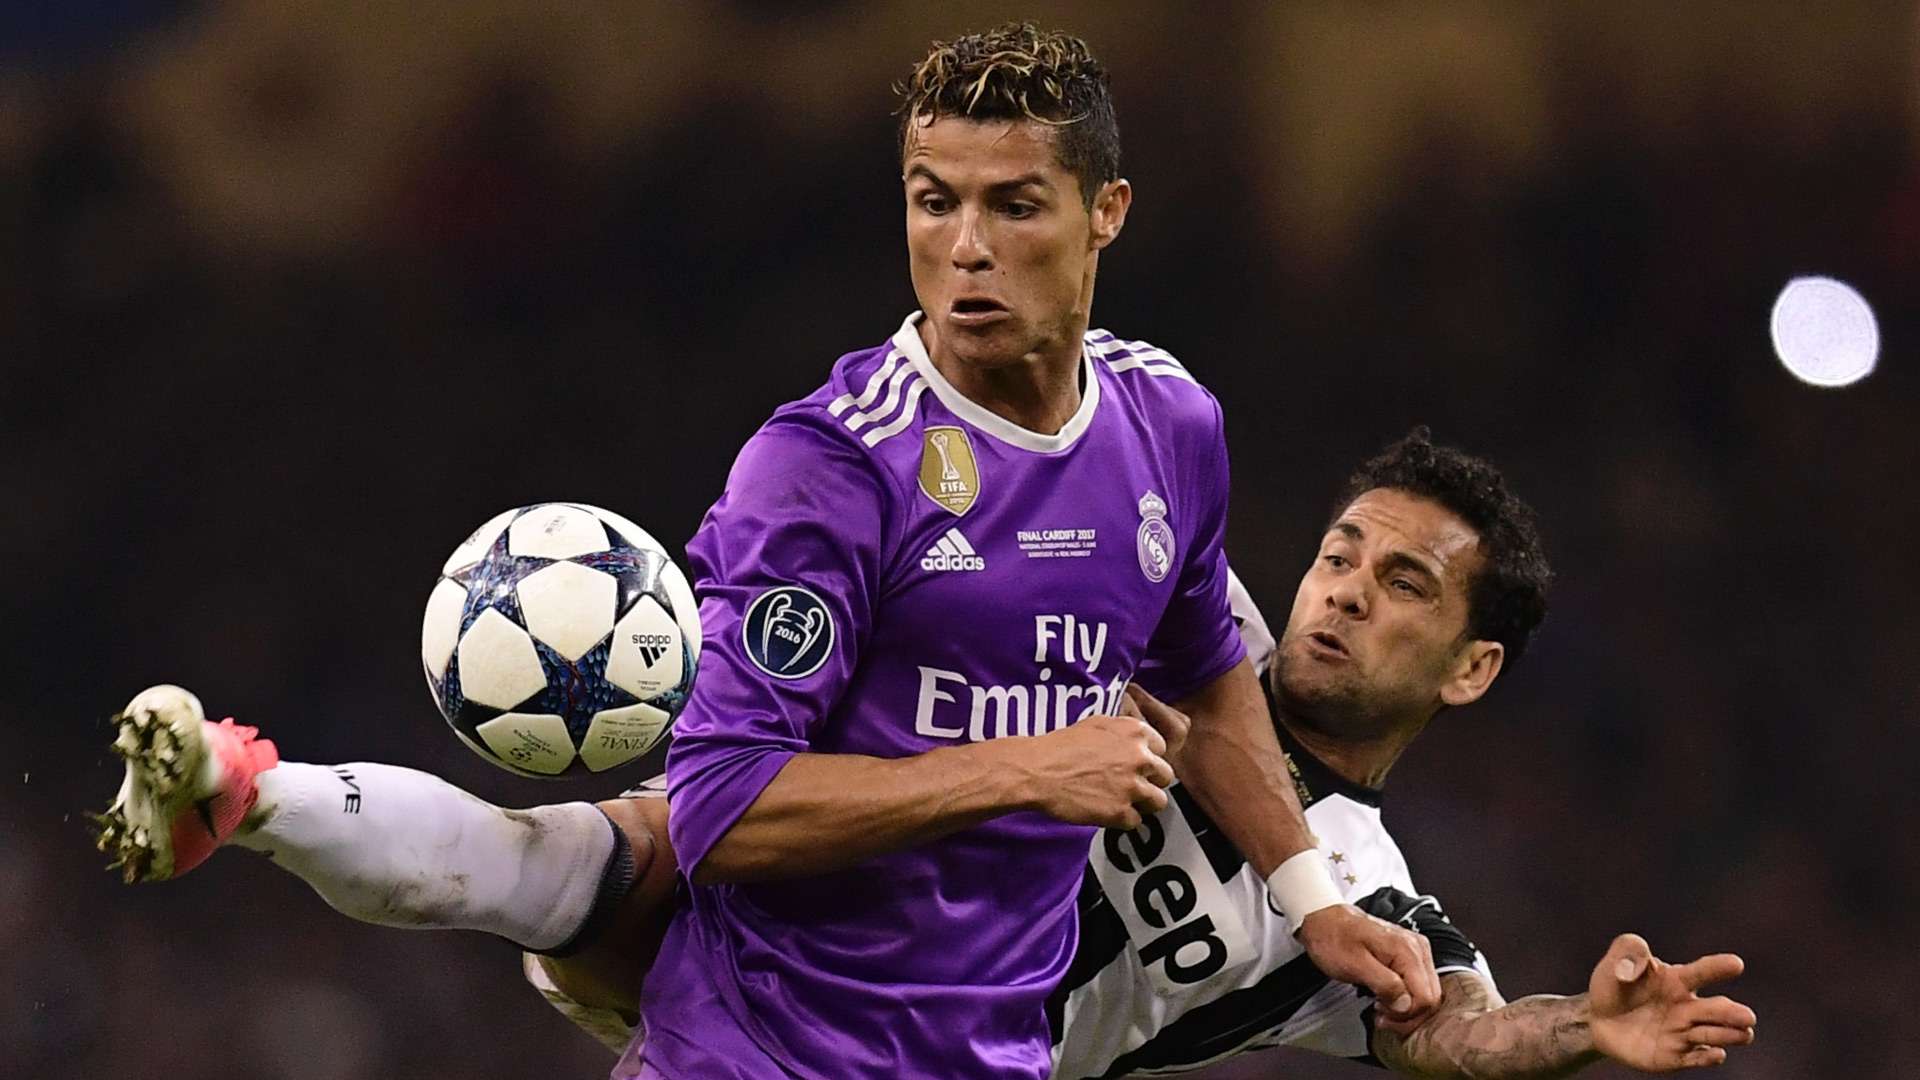 Cristiano Ronaldo Real Madrid Champions League Final 2017 against Juventus LIVE STREAM